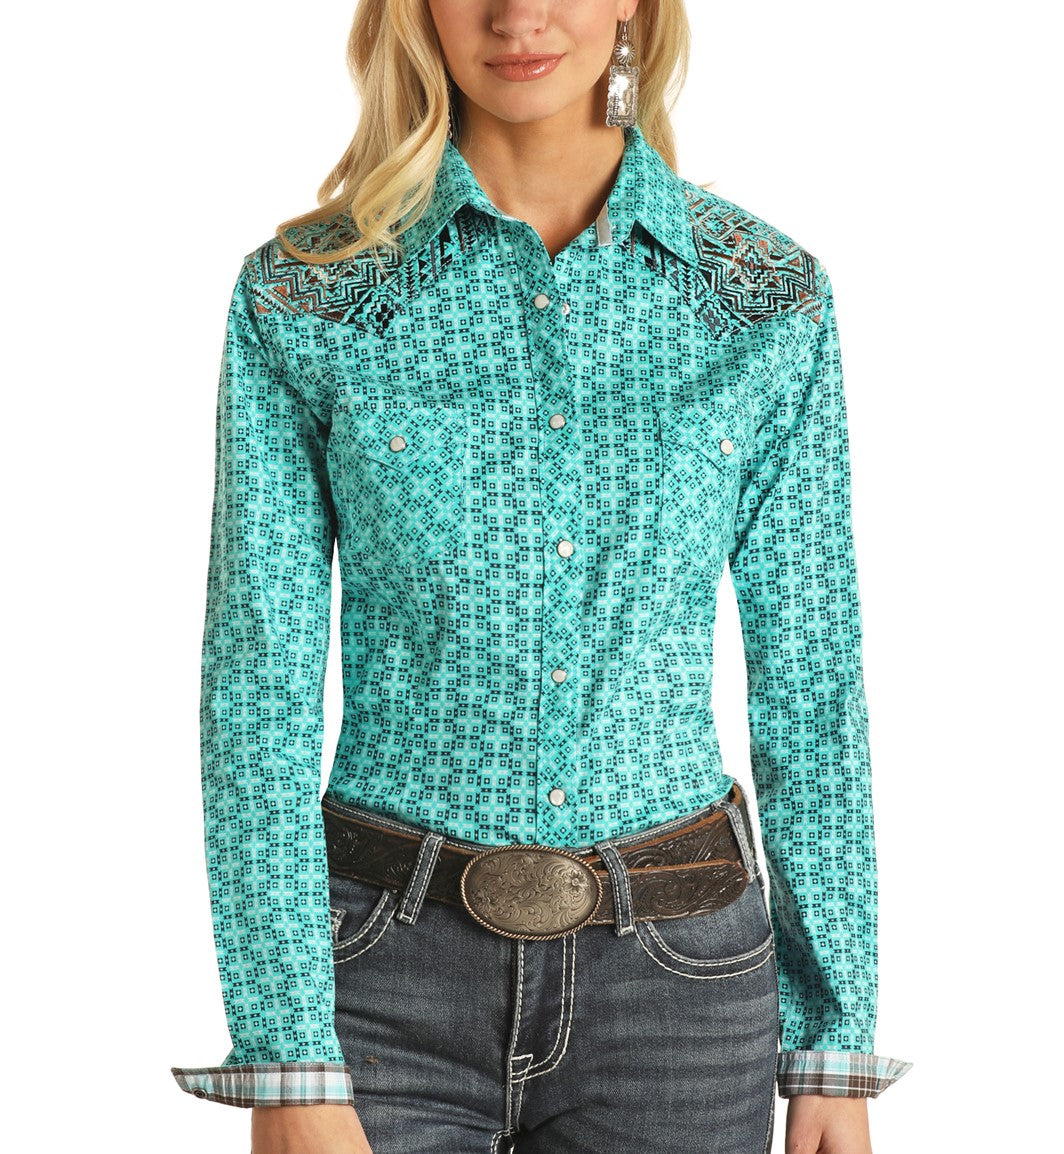 Panhandle Rough Stock Ladies Light Turquoise Printed Shirt R4S2492